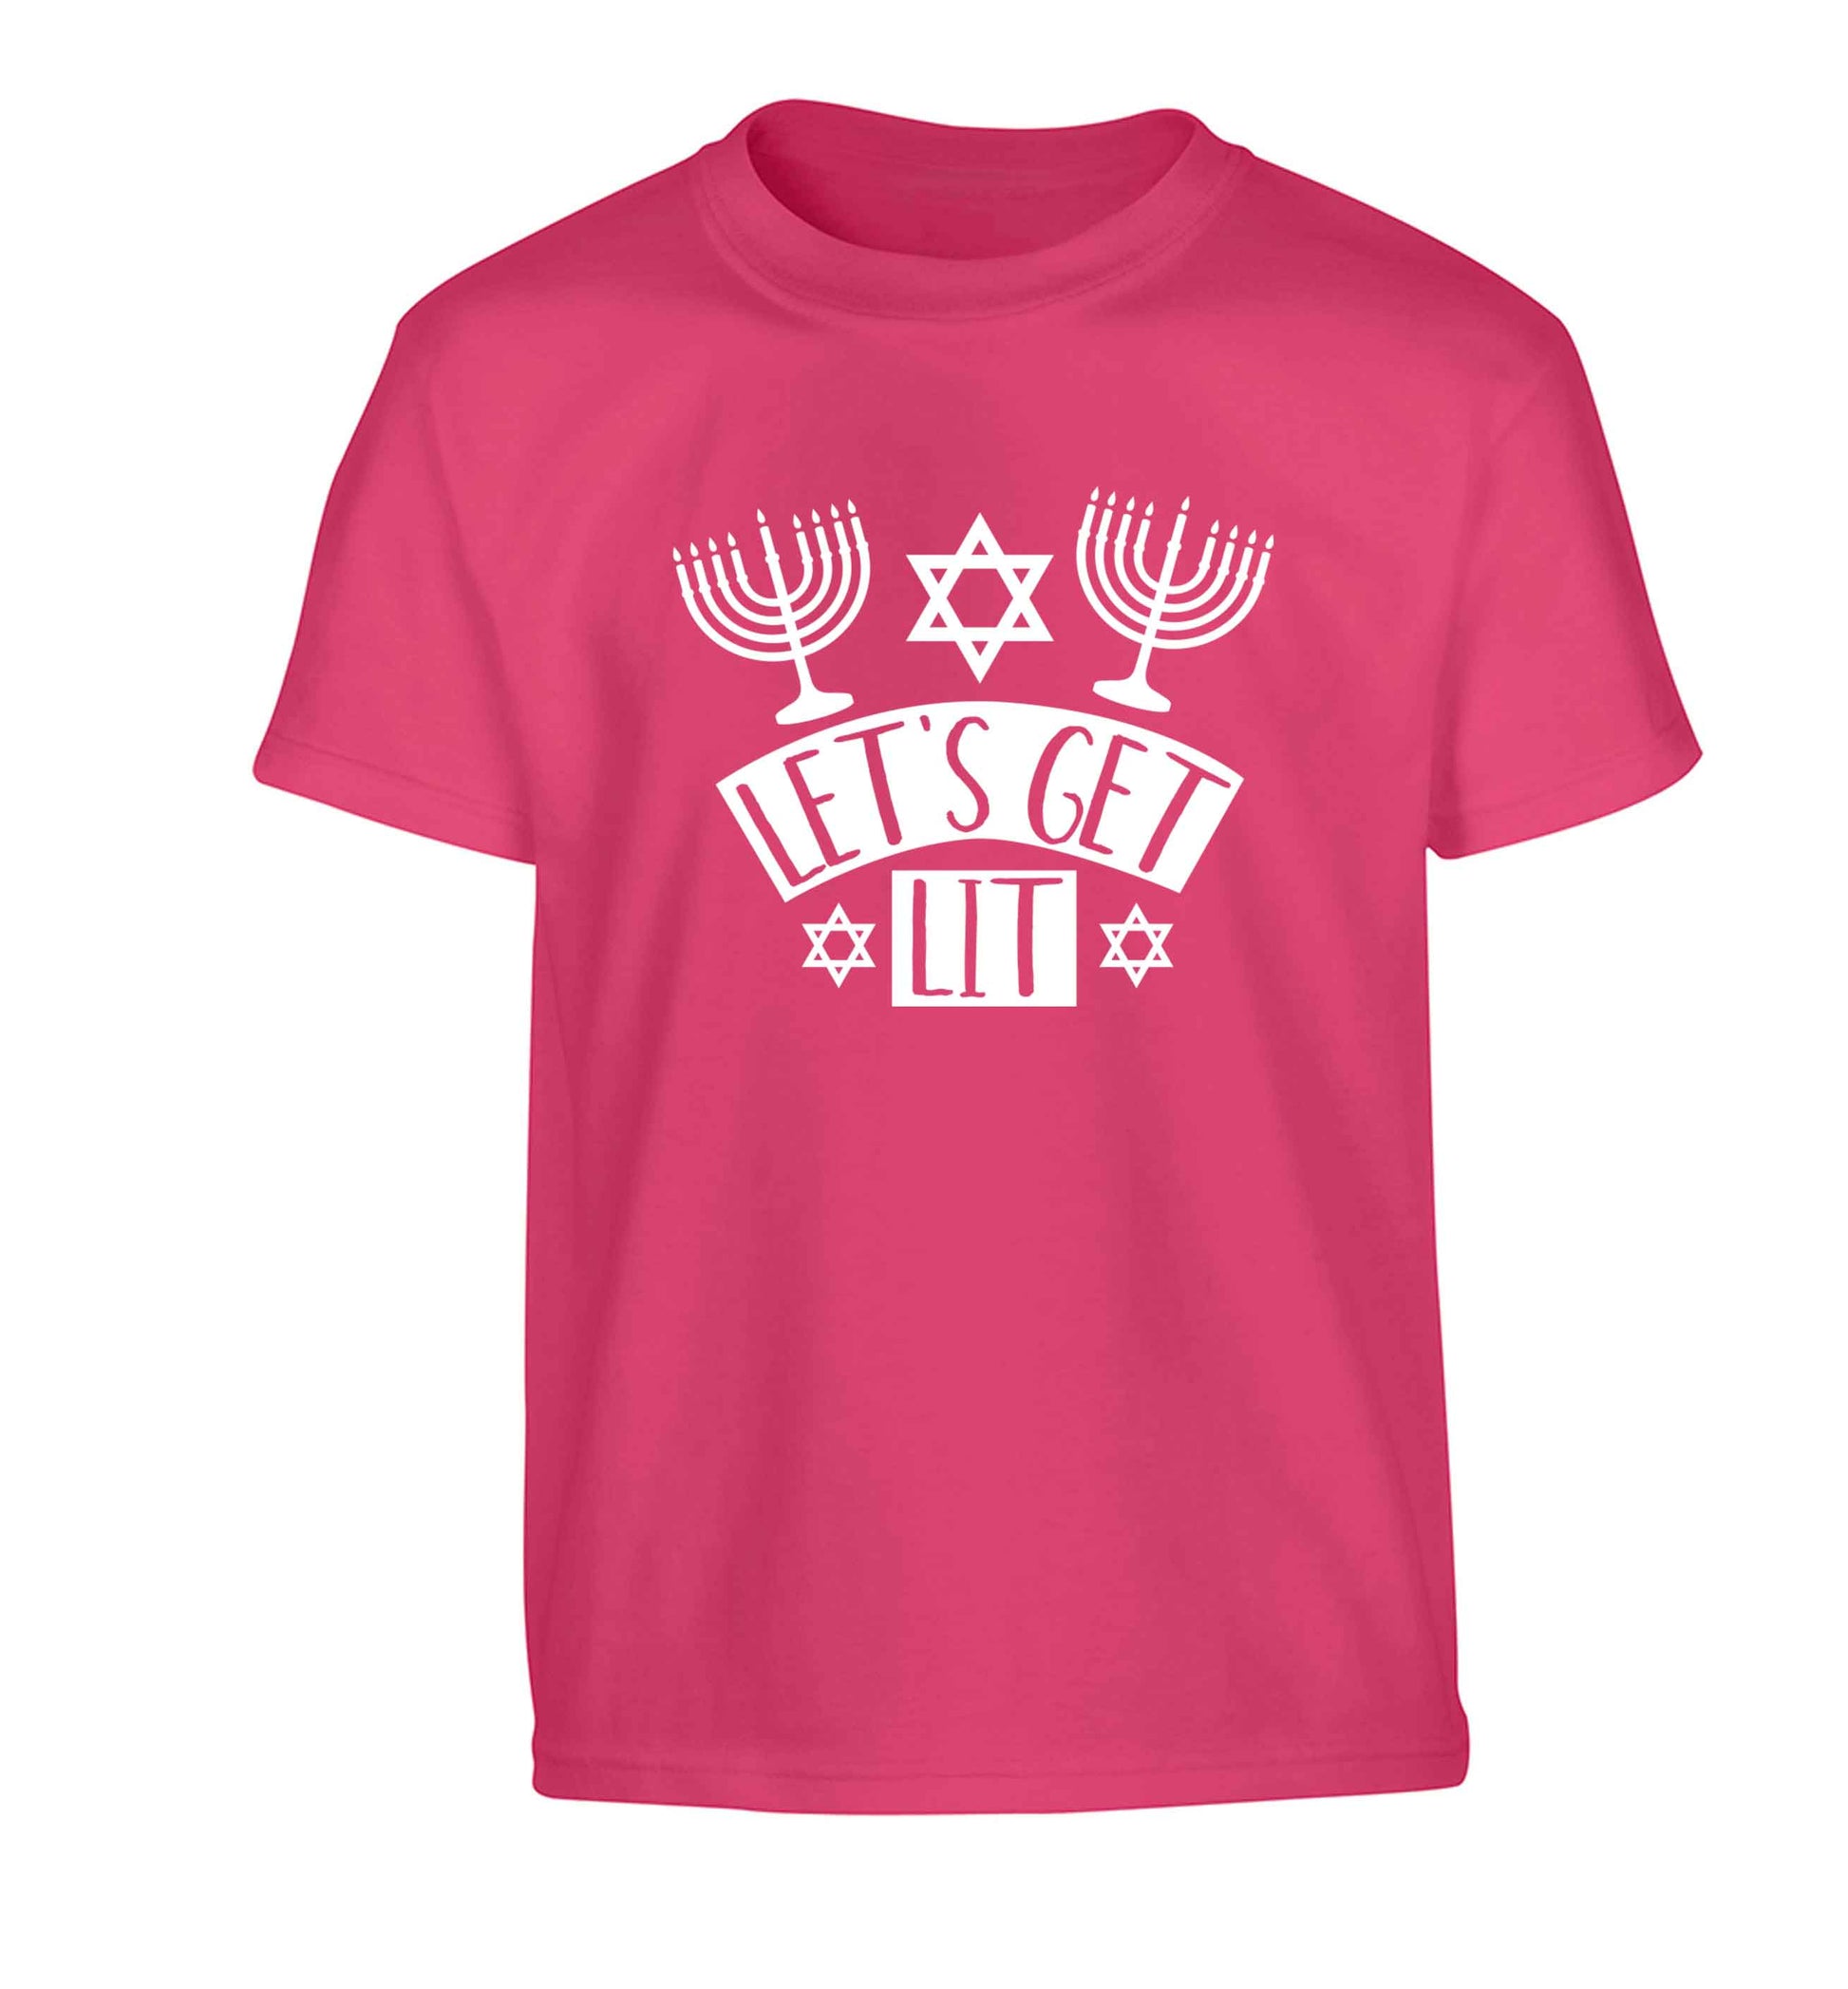 Let's get lit Children's pink Tshirt 12-13 Years